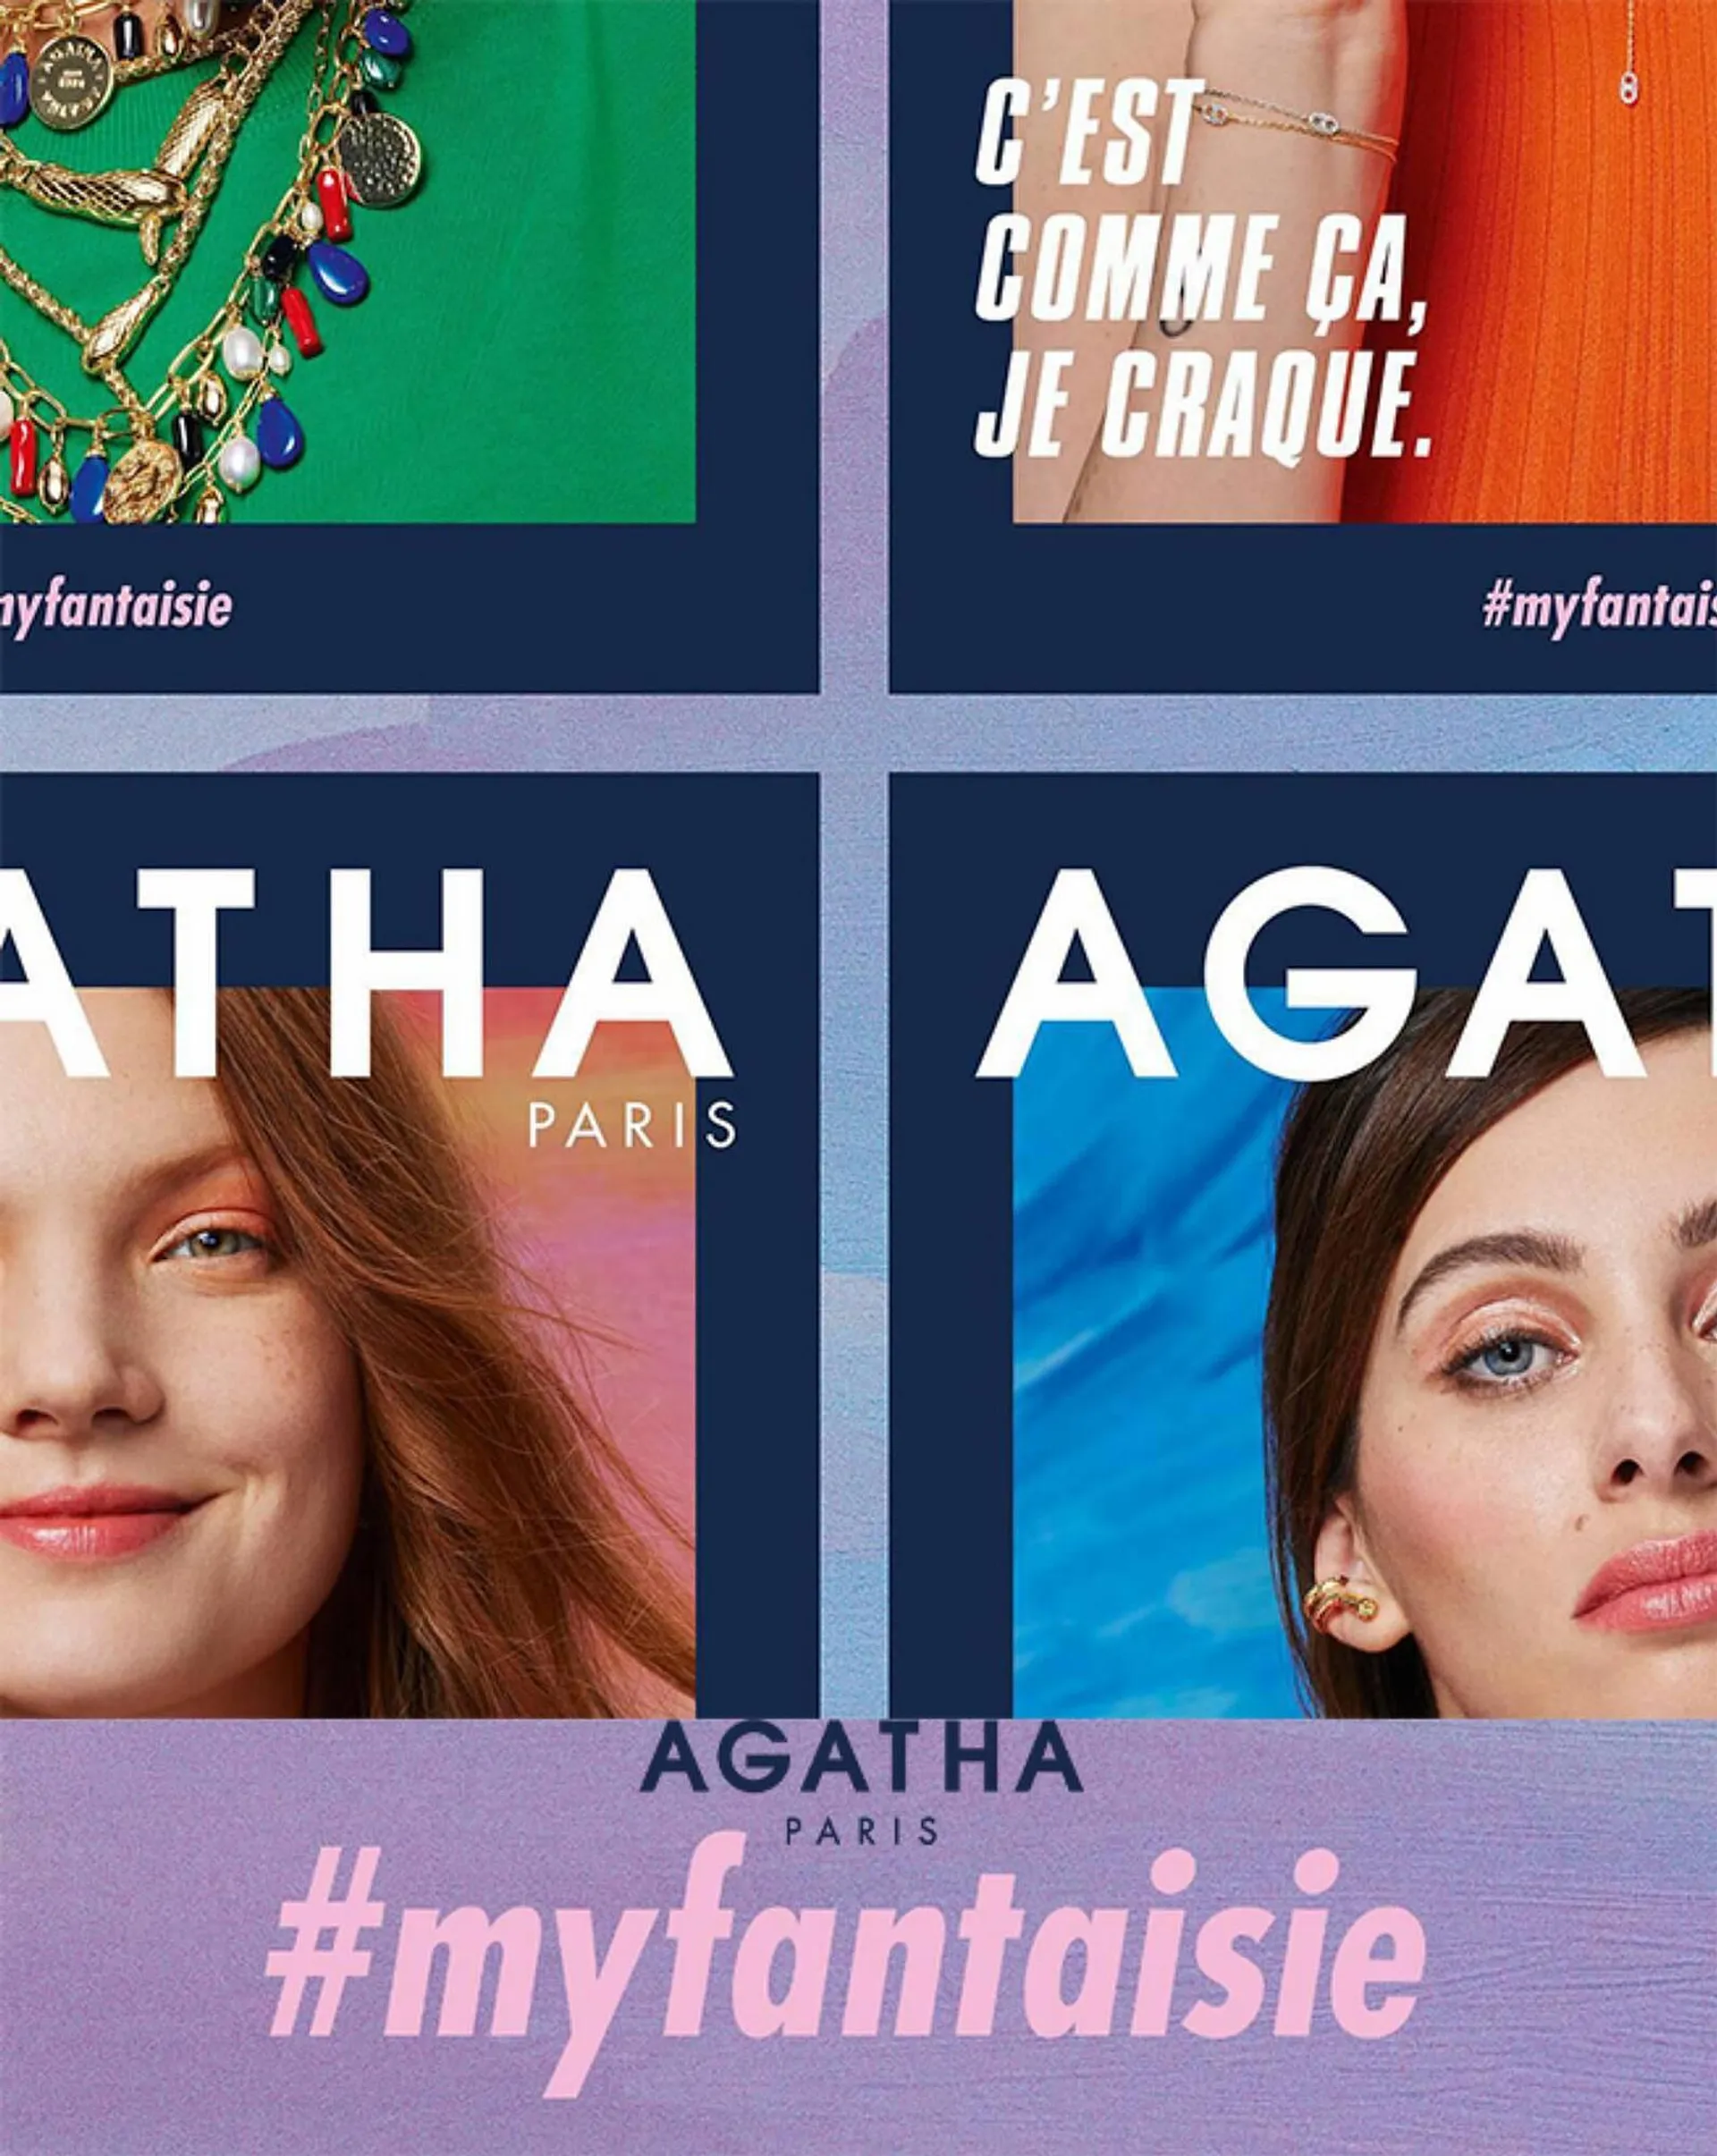 Catalogue Agatha - 1